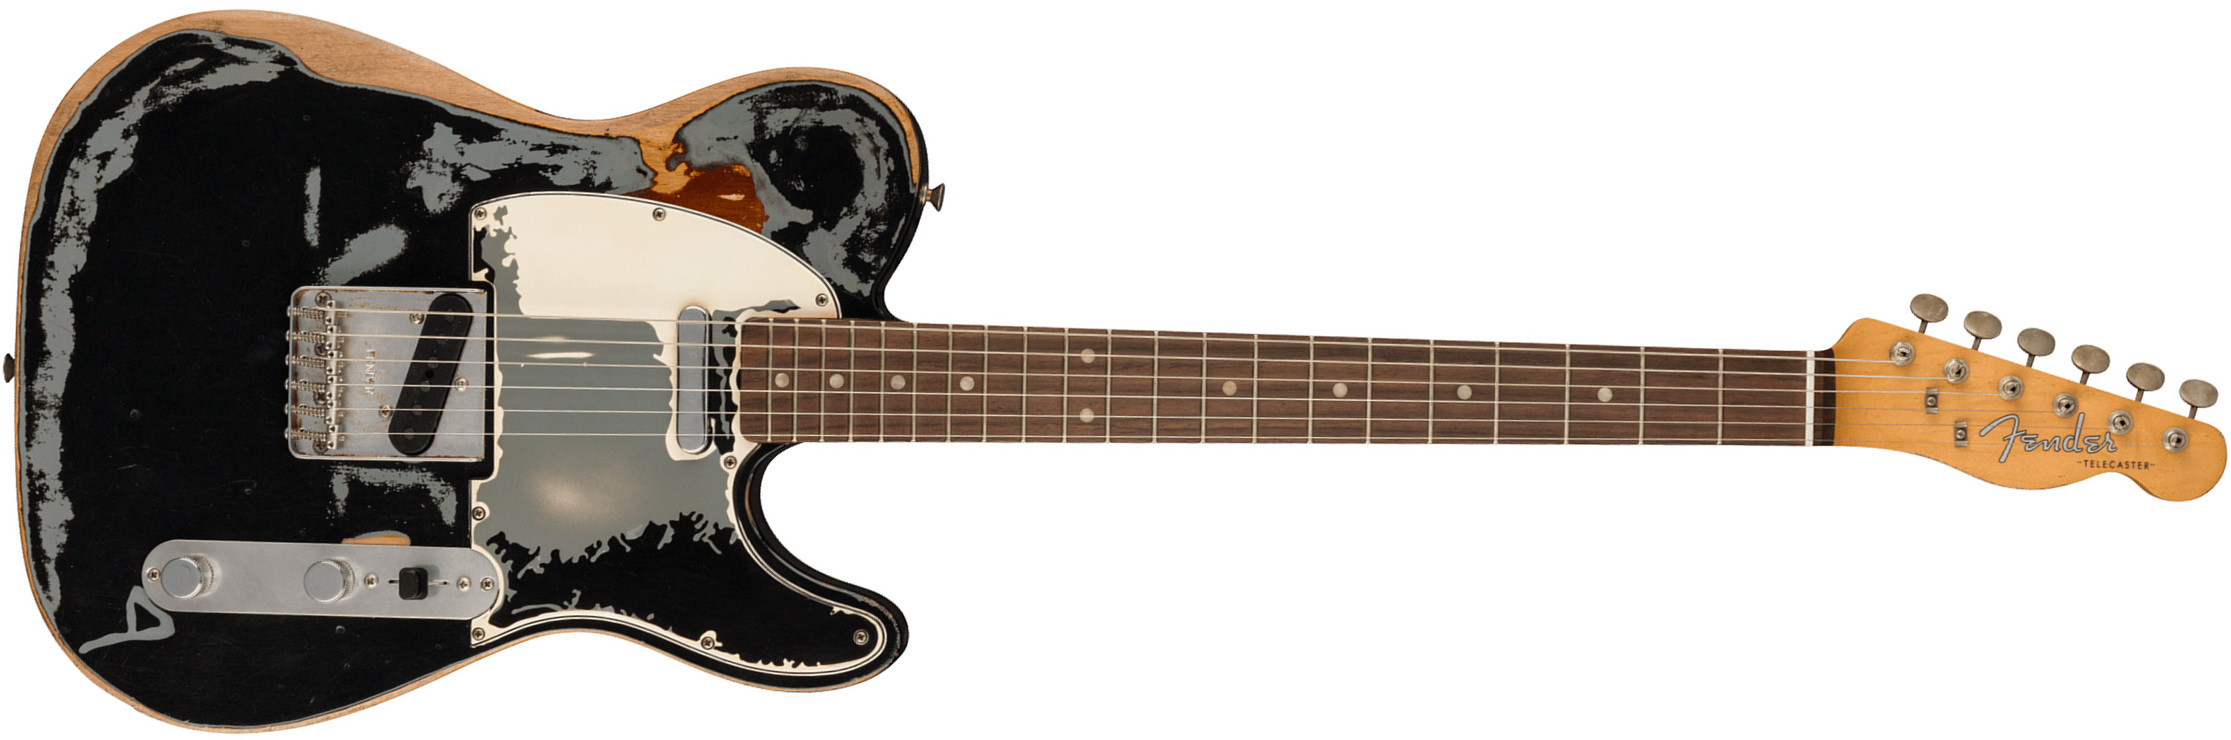 Fender Joe Strummer Tele Mex Signature 2s Ht Rw - Road Worn Black Over 3-color Sunburst - Televorm elektrische gitaar - Main picture